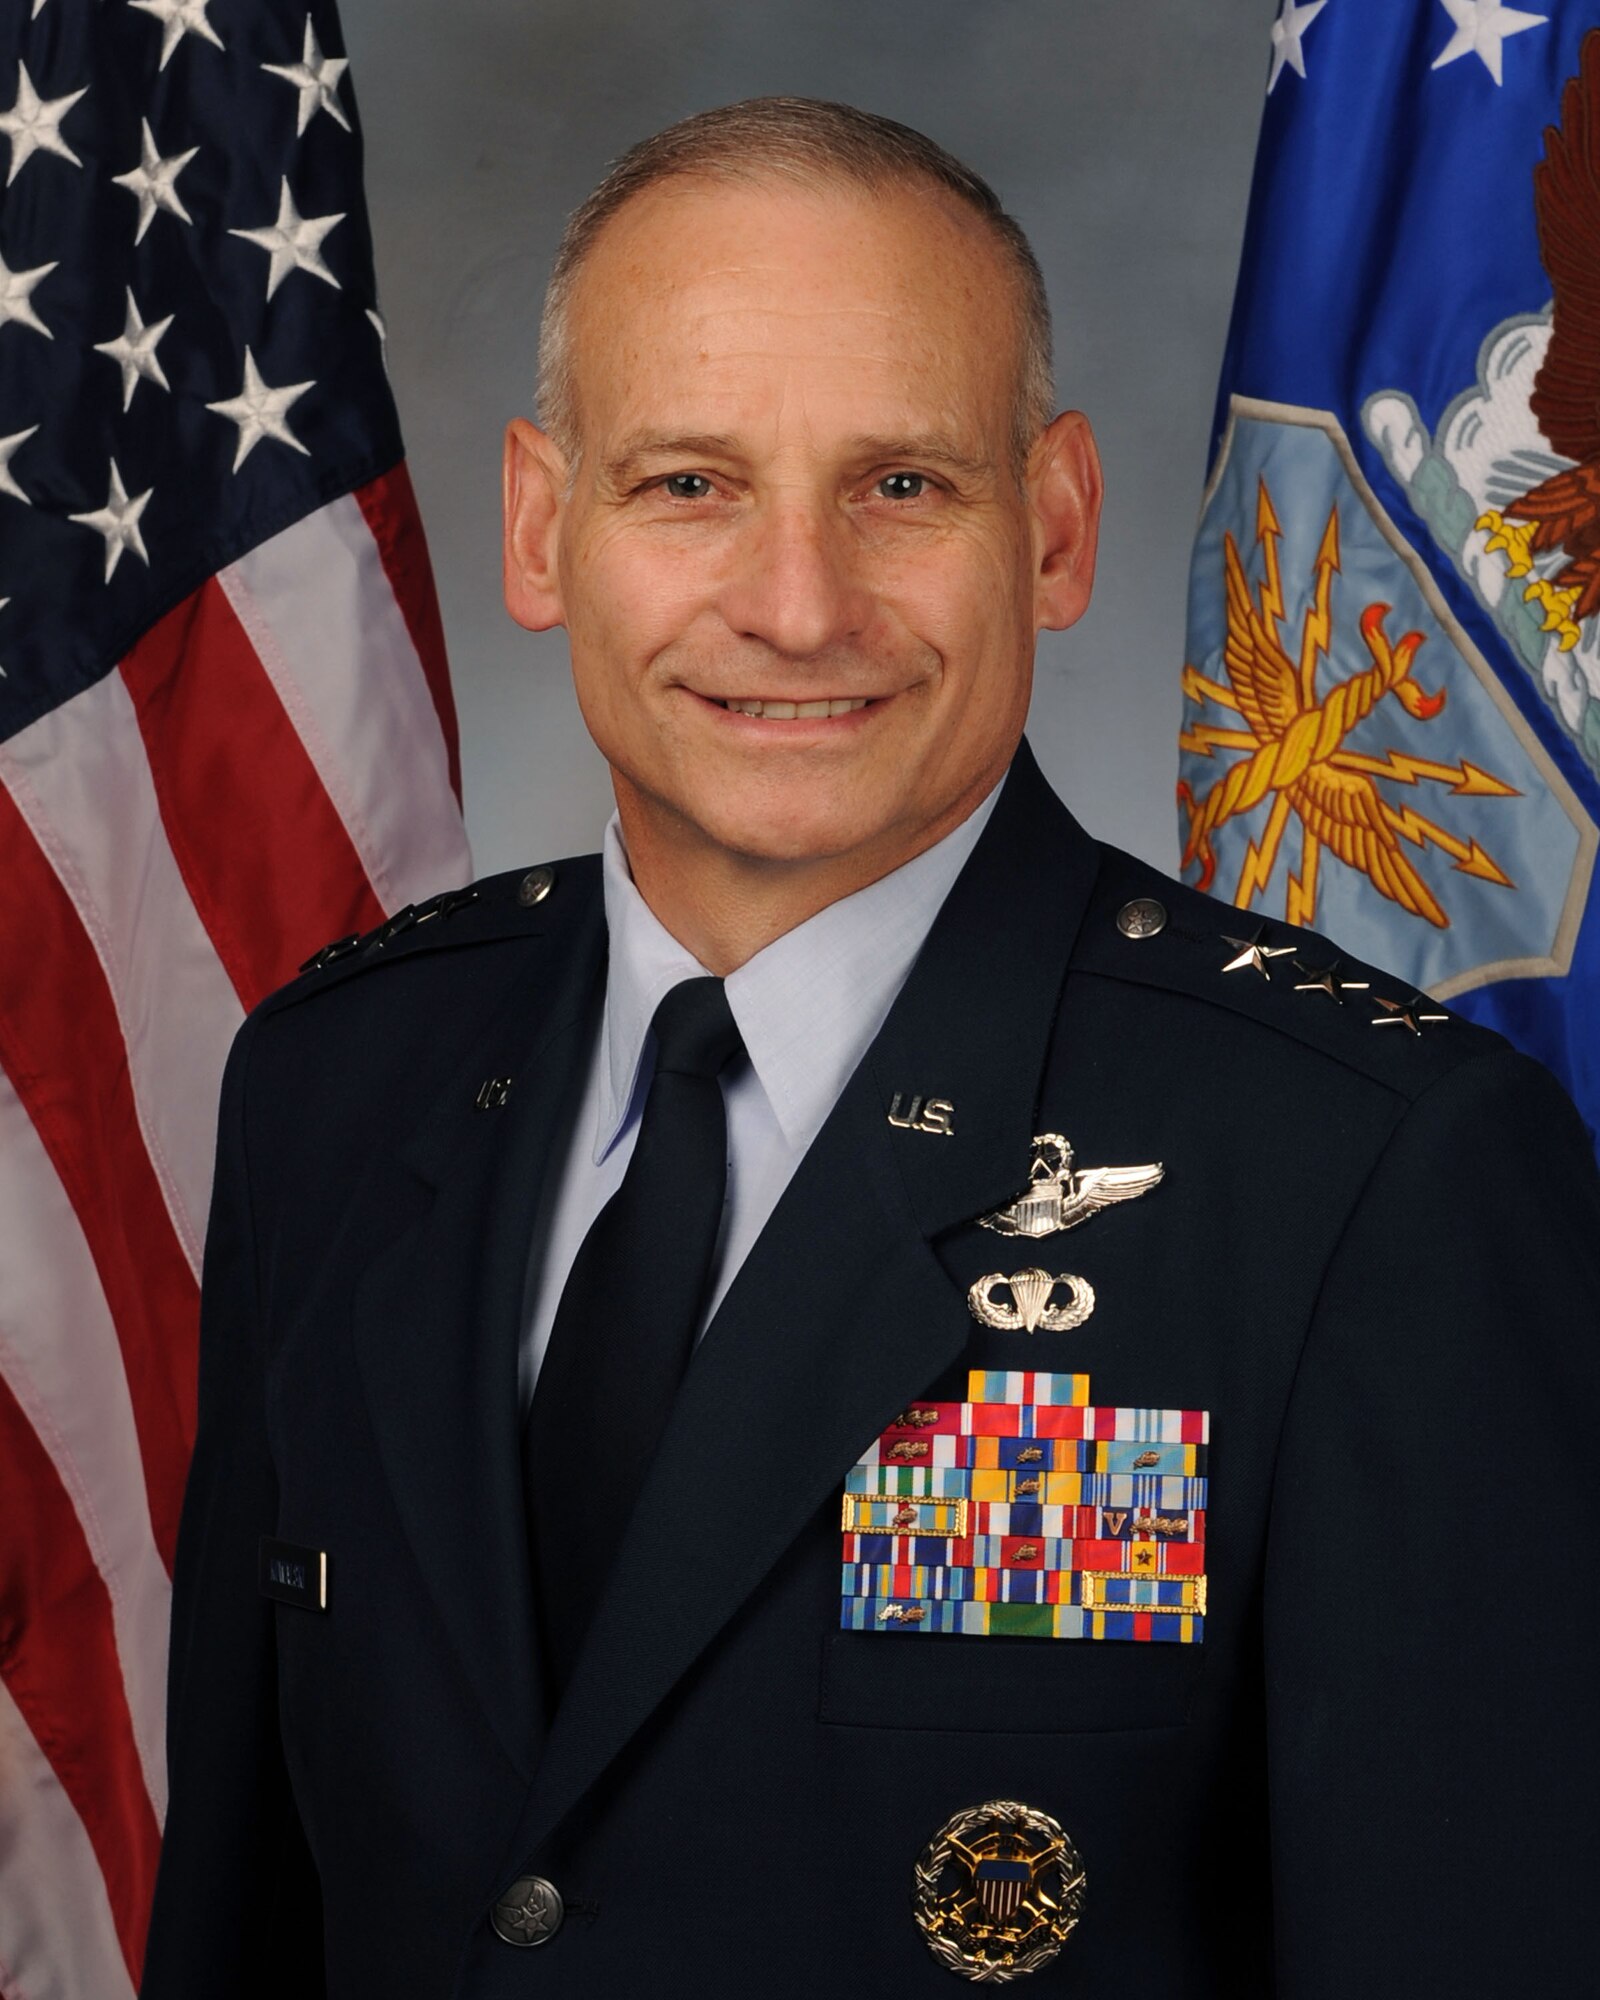 Lt. Gen. Jim Kowalski